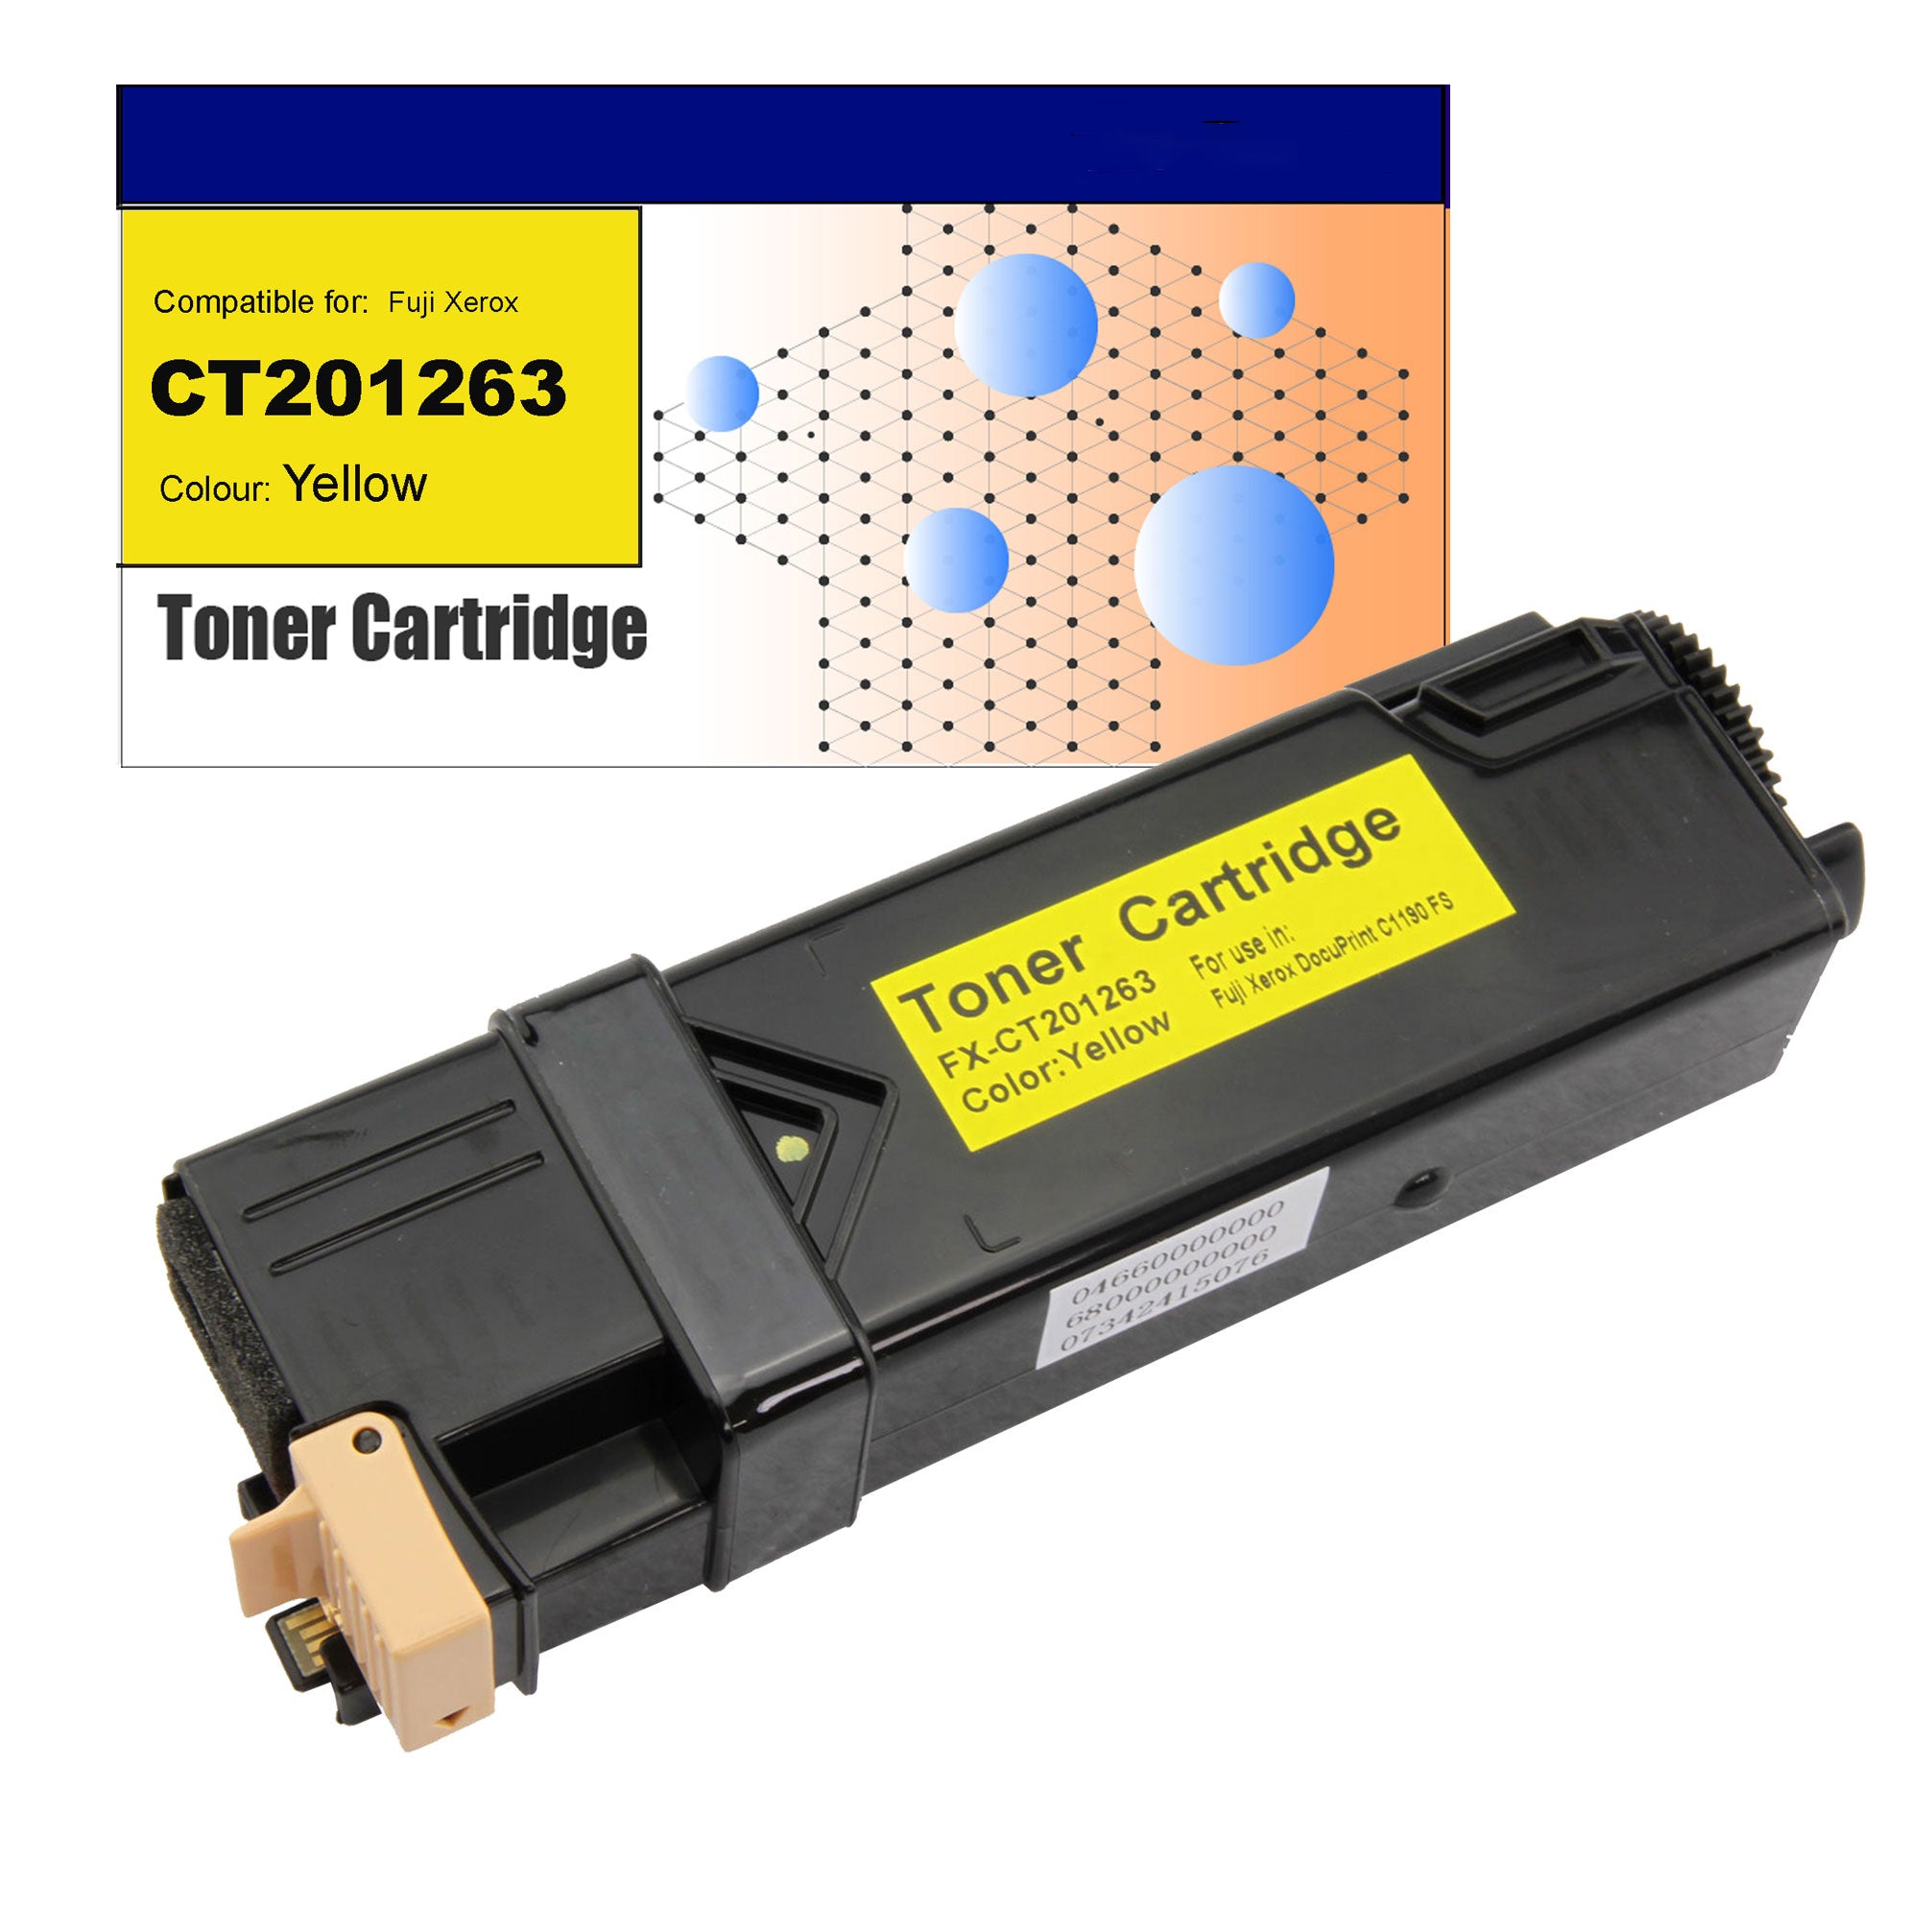 Compatible Toner for Fuji Xerox CT201263 (C1190) yellow toner cartridges